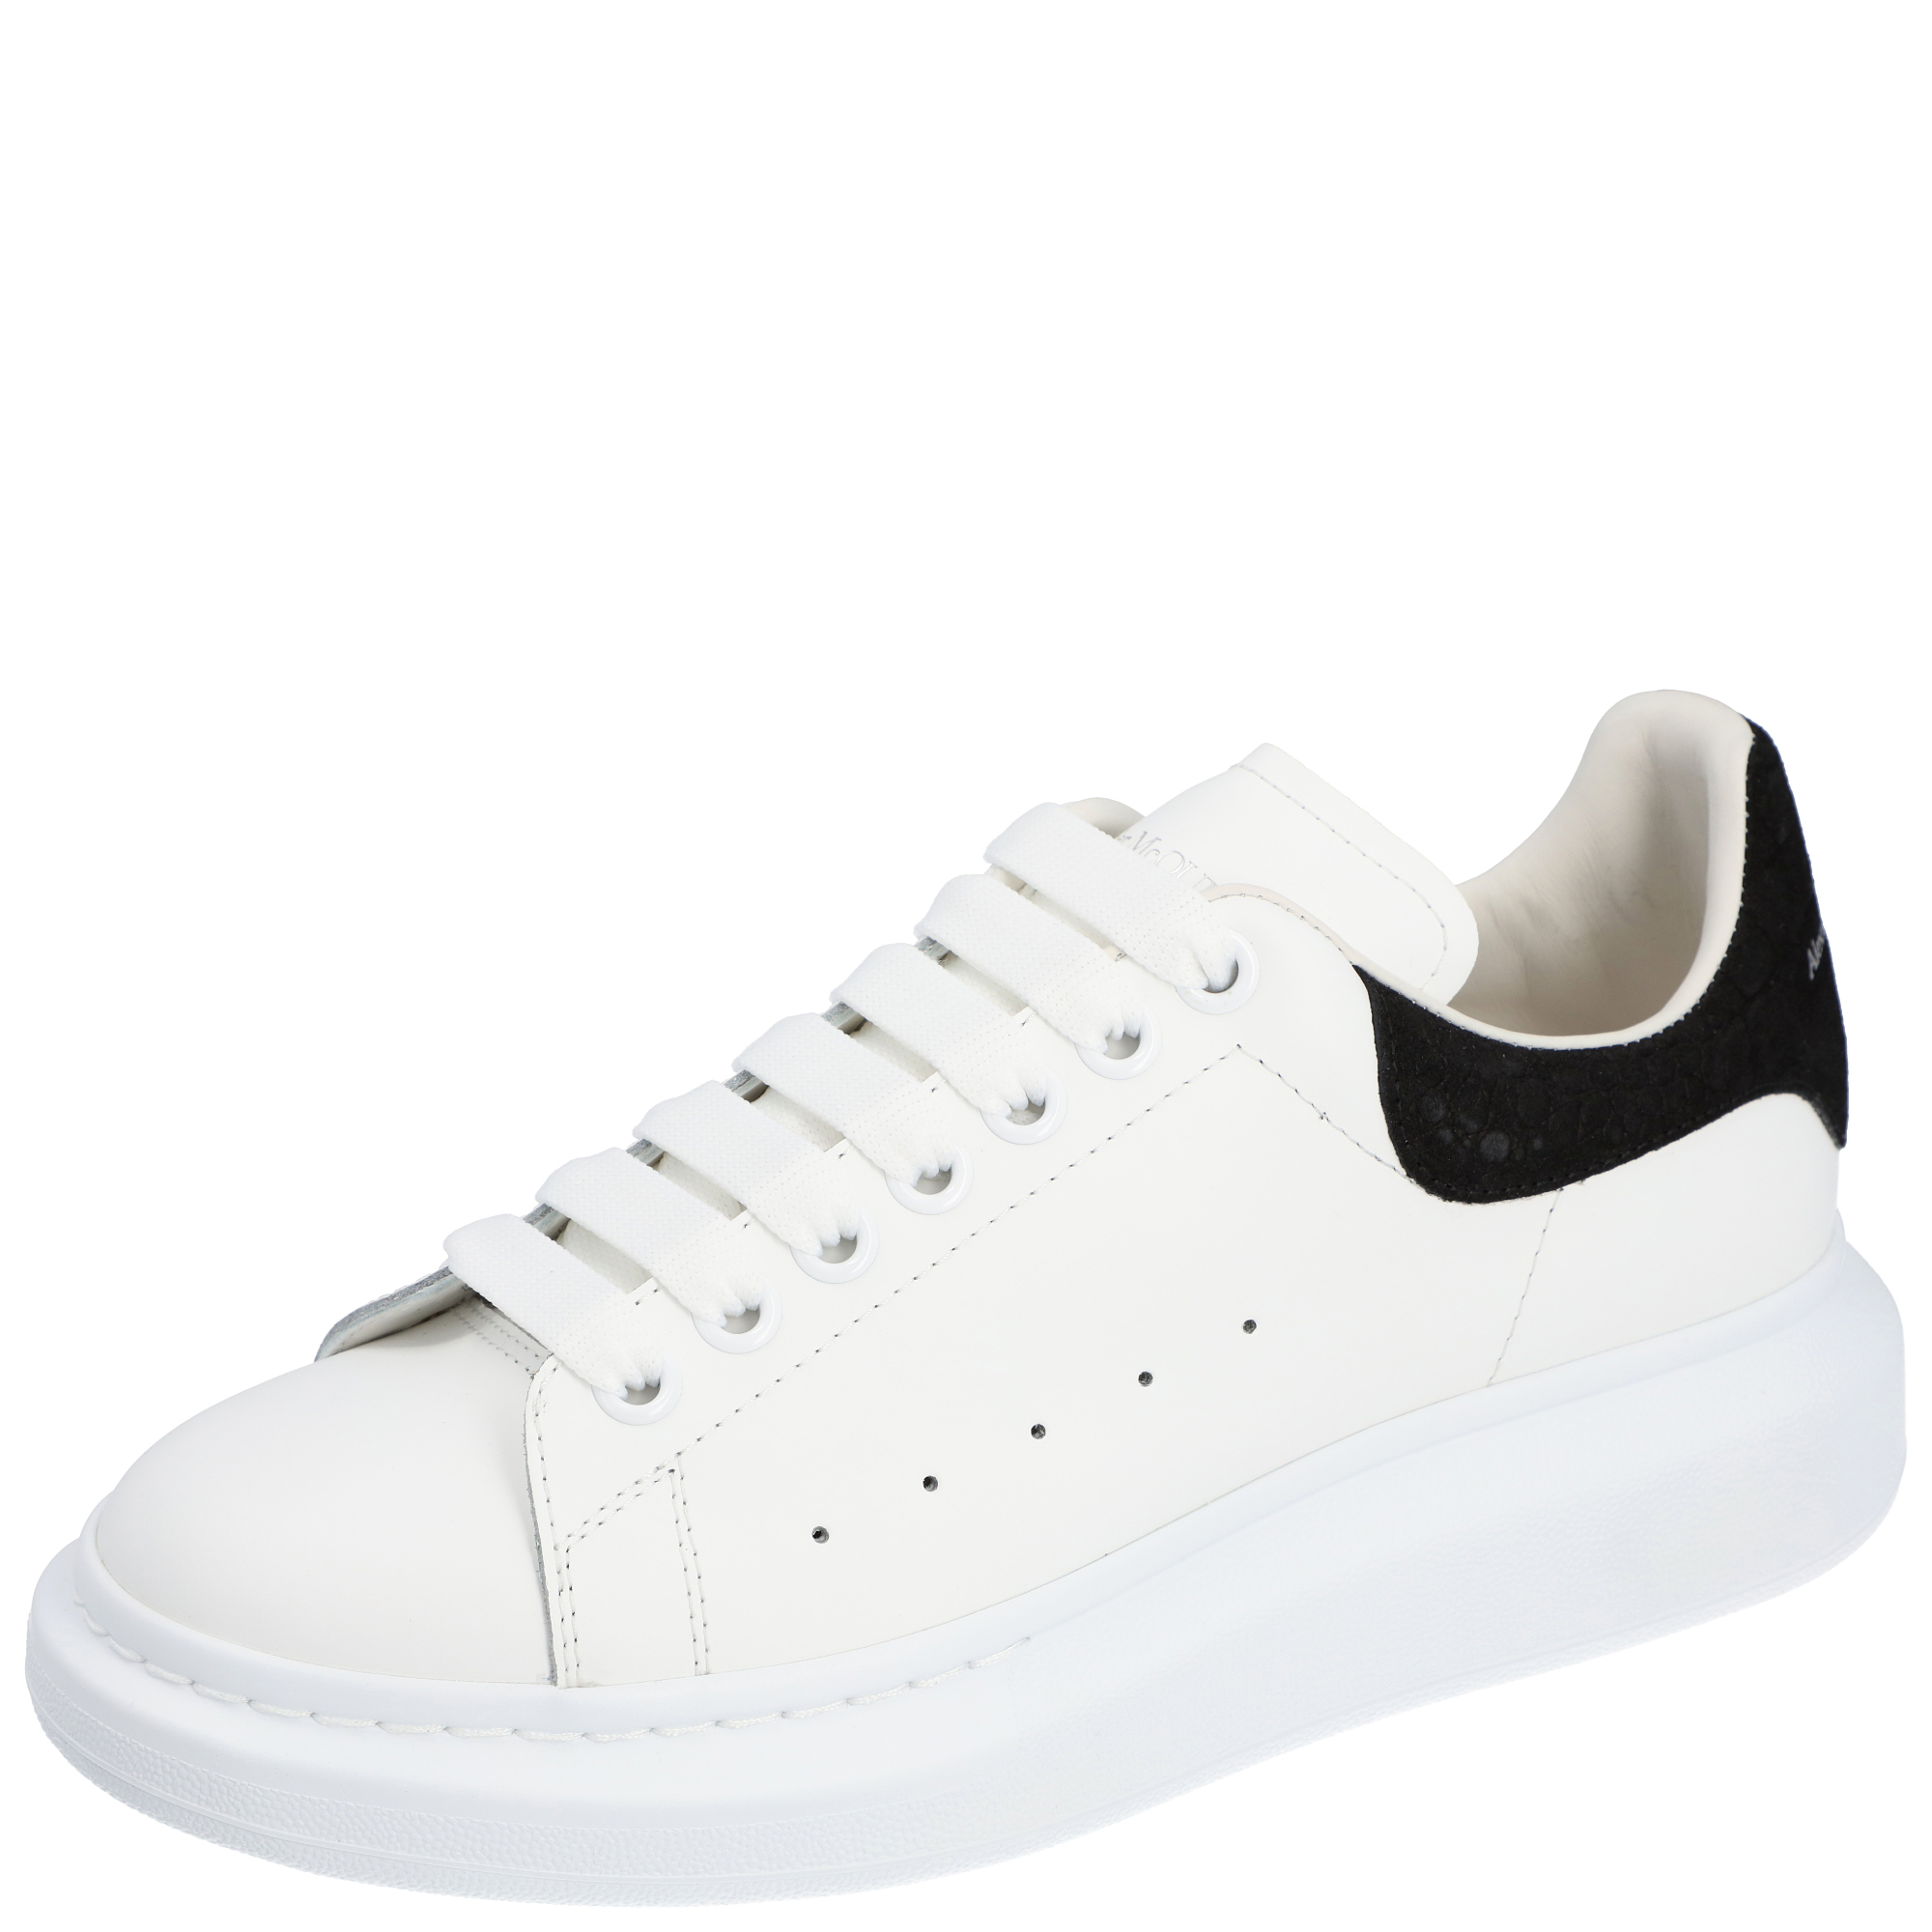 Alexander McQueen White/Black Oversized Sneakers Size EU 40,5